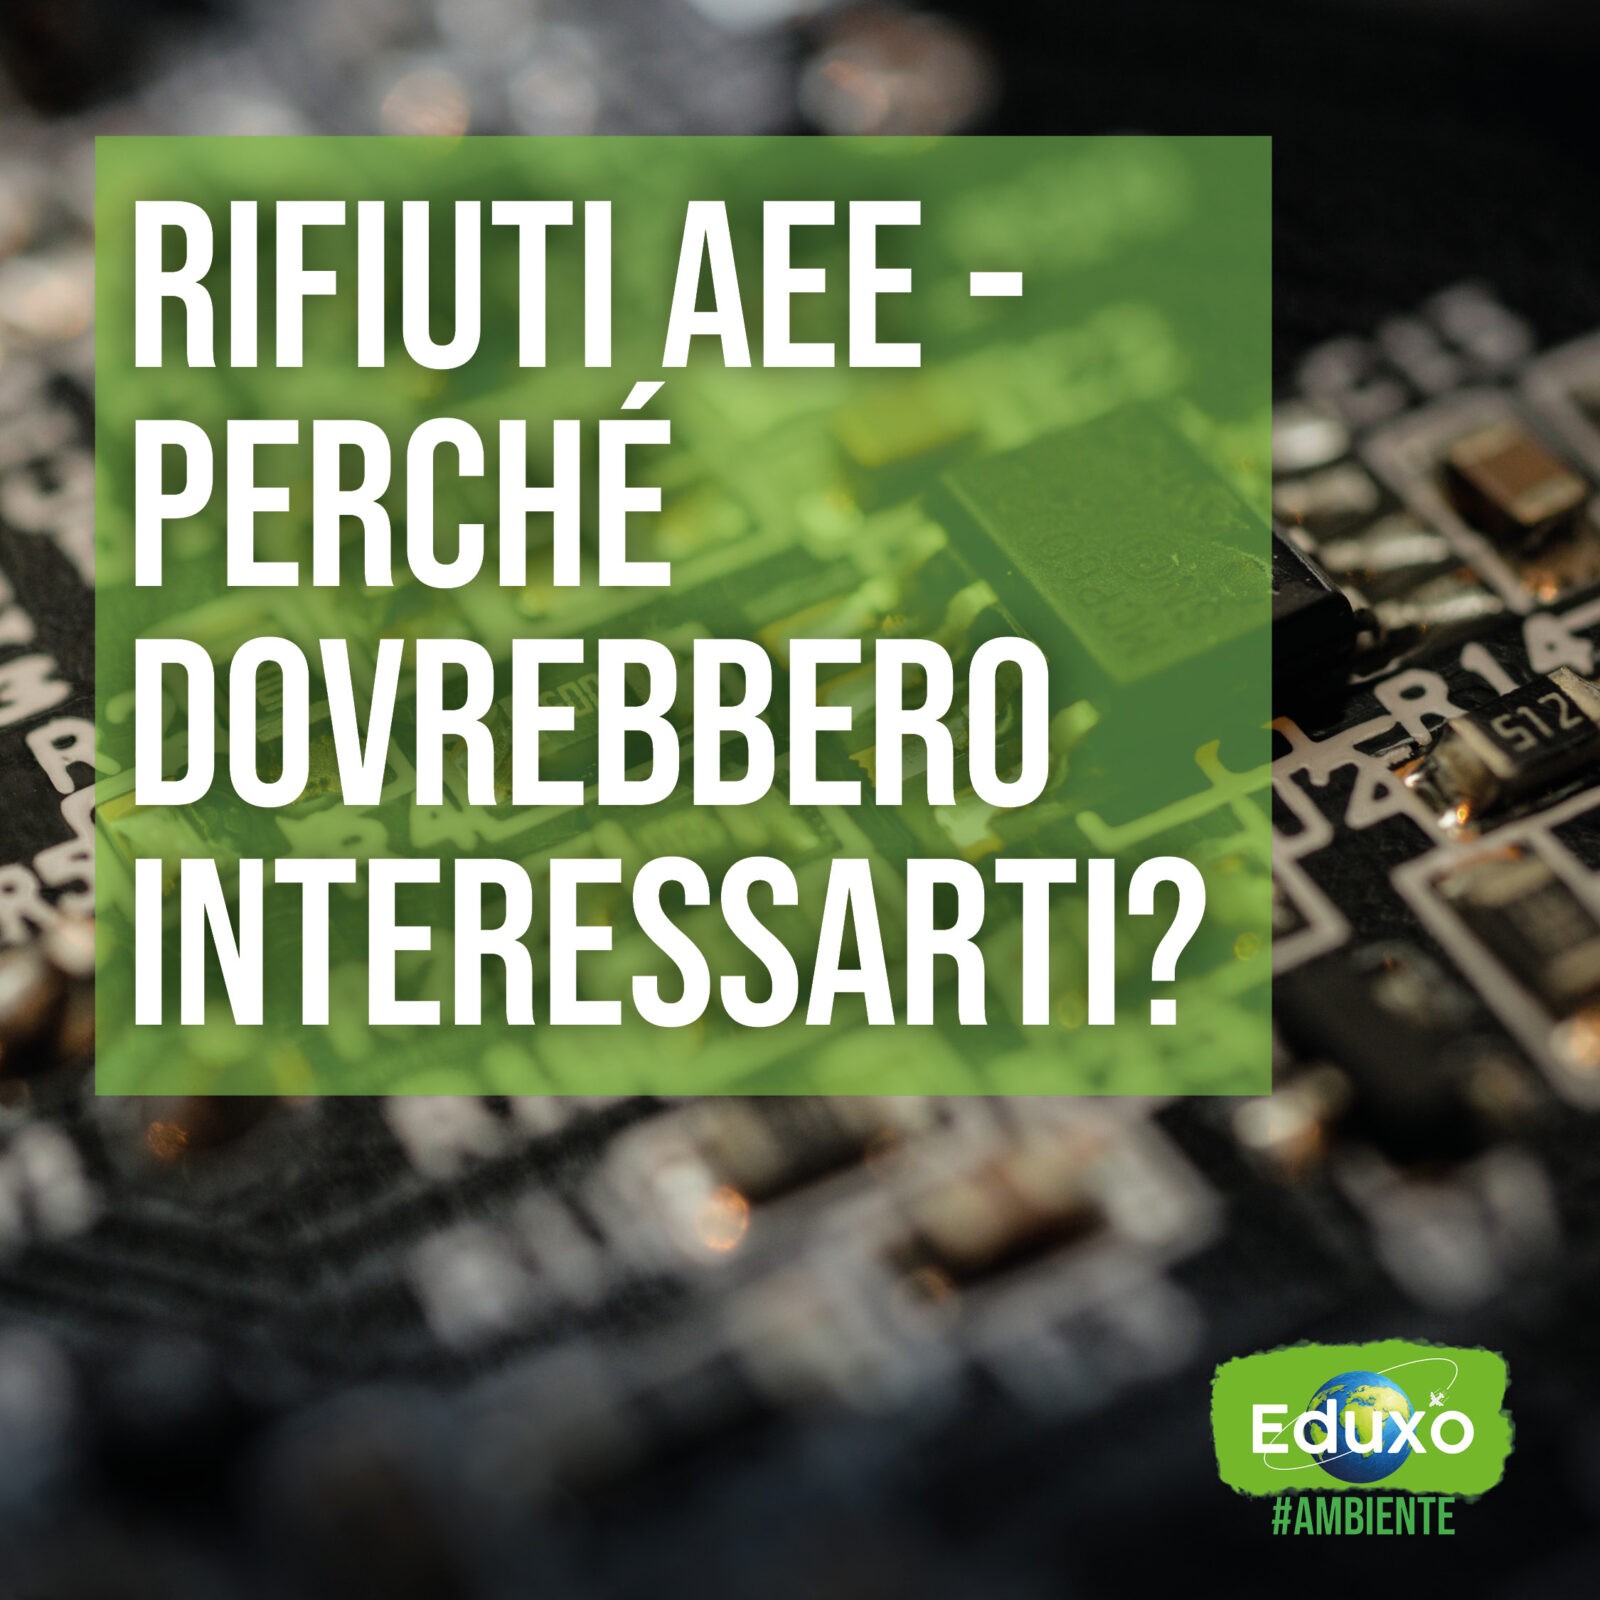 You are currently viewing Rifiuti AEE, perchè dovrebbero interessarti?